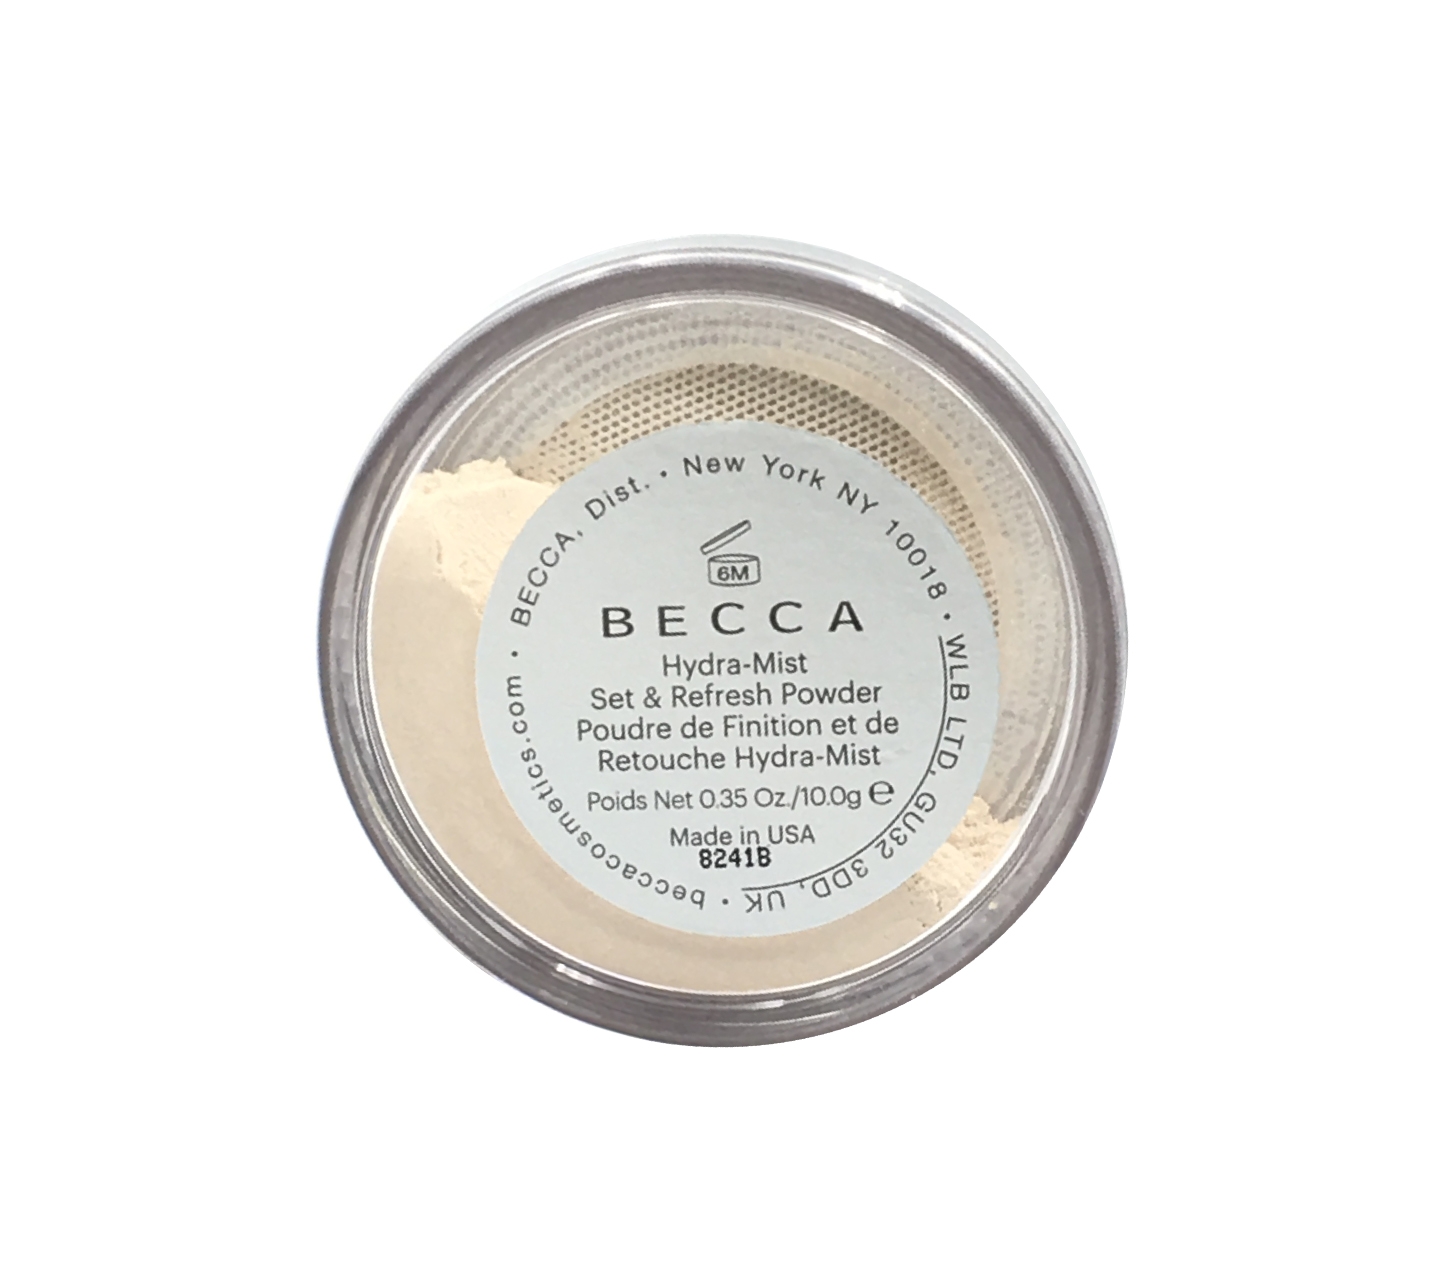 Becca Hydra-Mist Set & Refresh Powder Faces